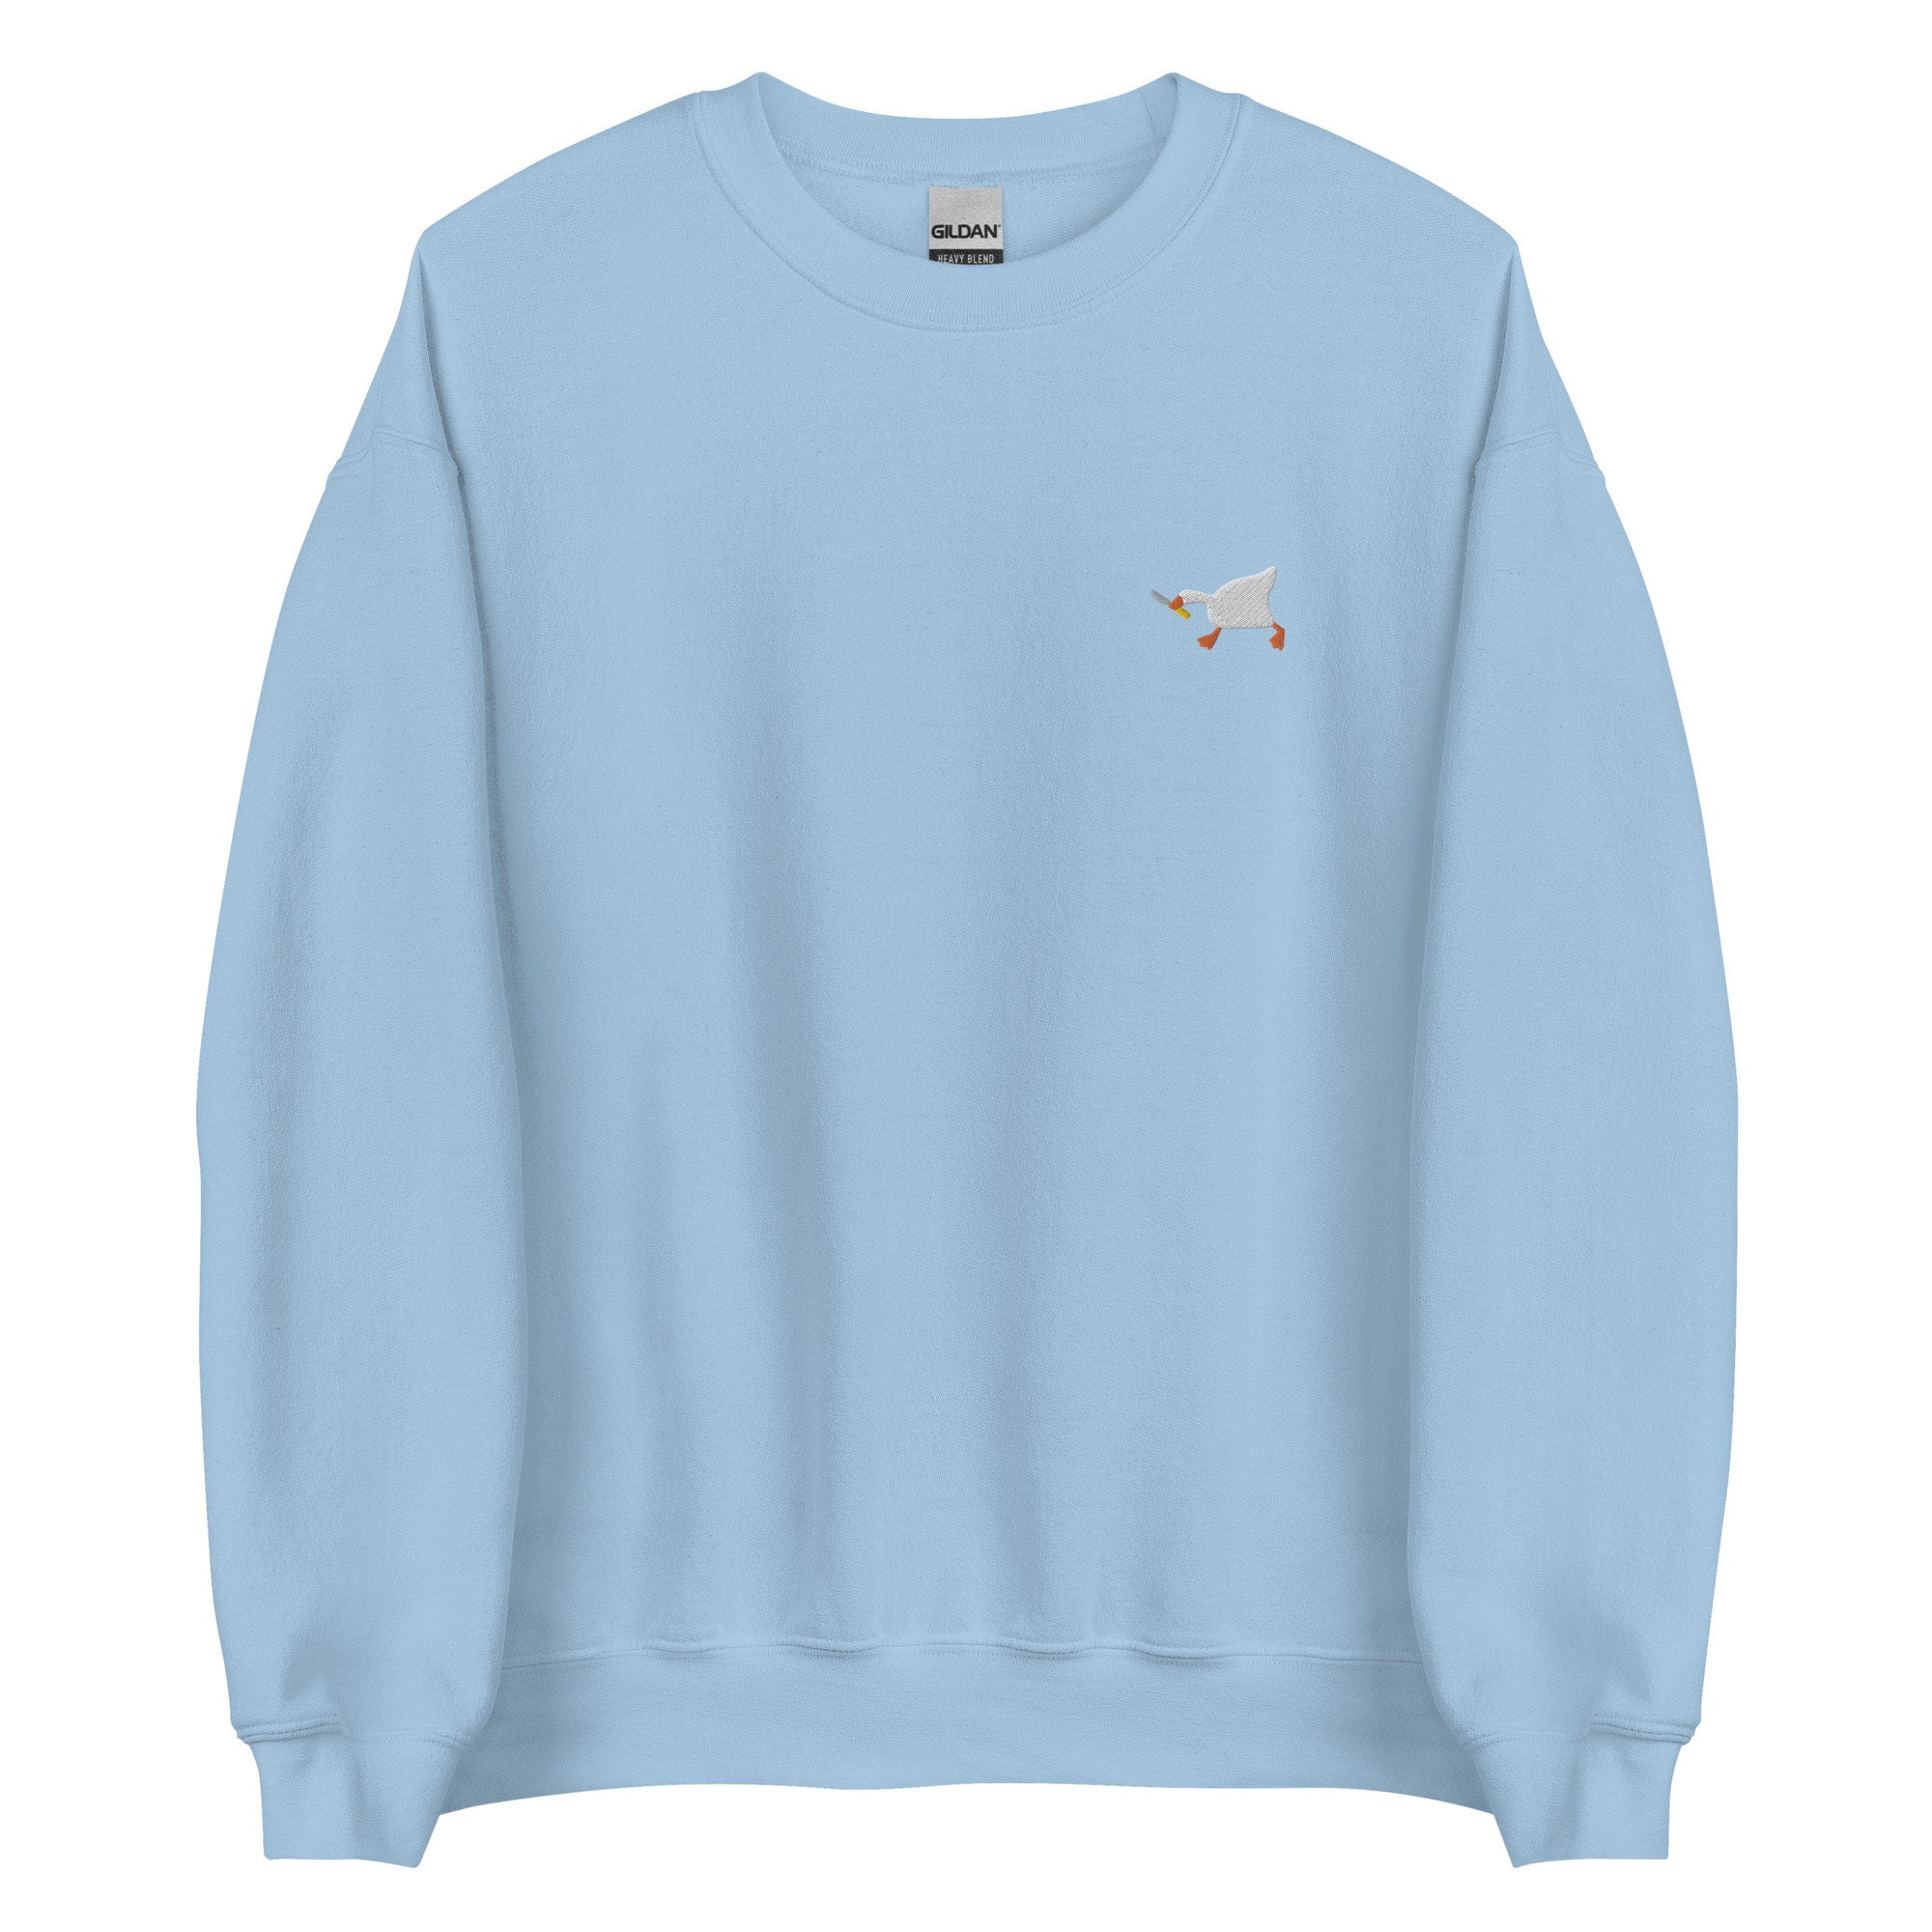 Discover Goose Embroidered Unisex Crew Neck Sweatshirt